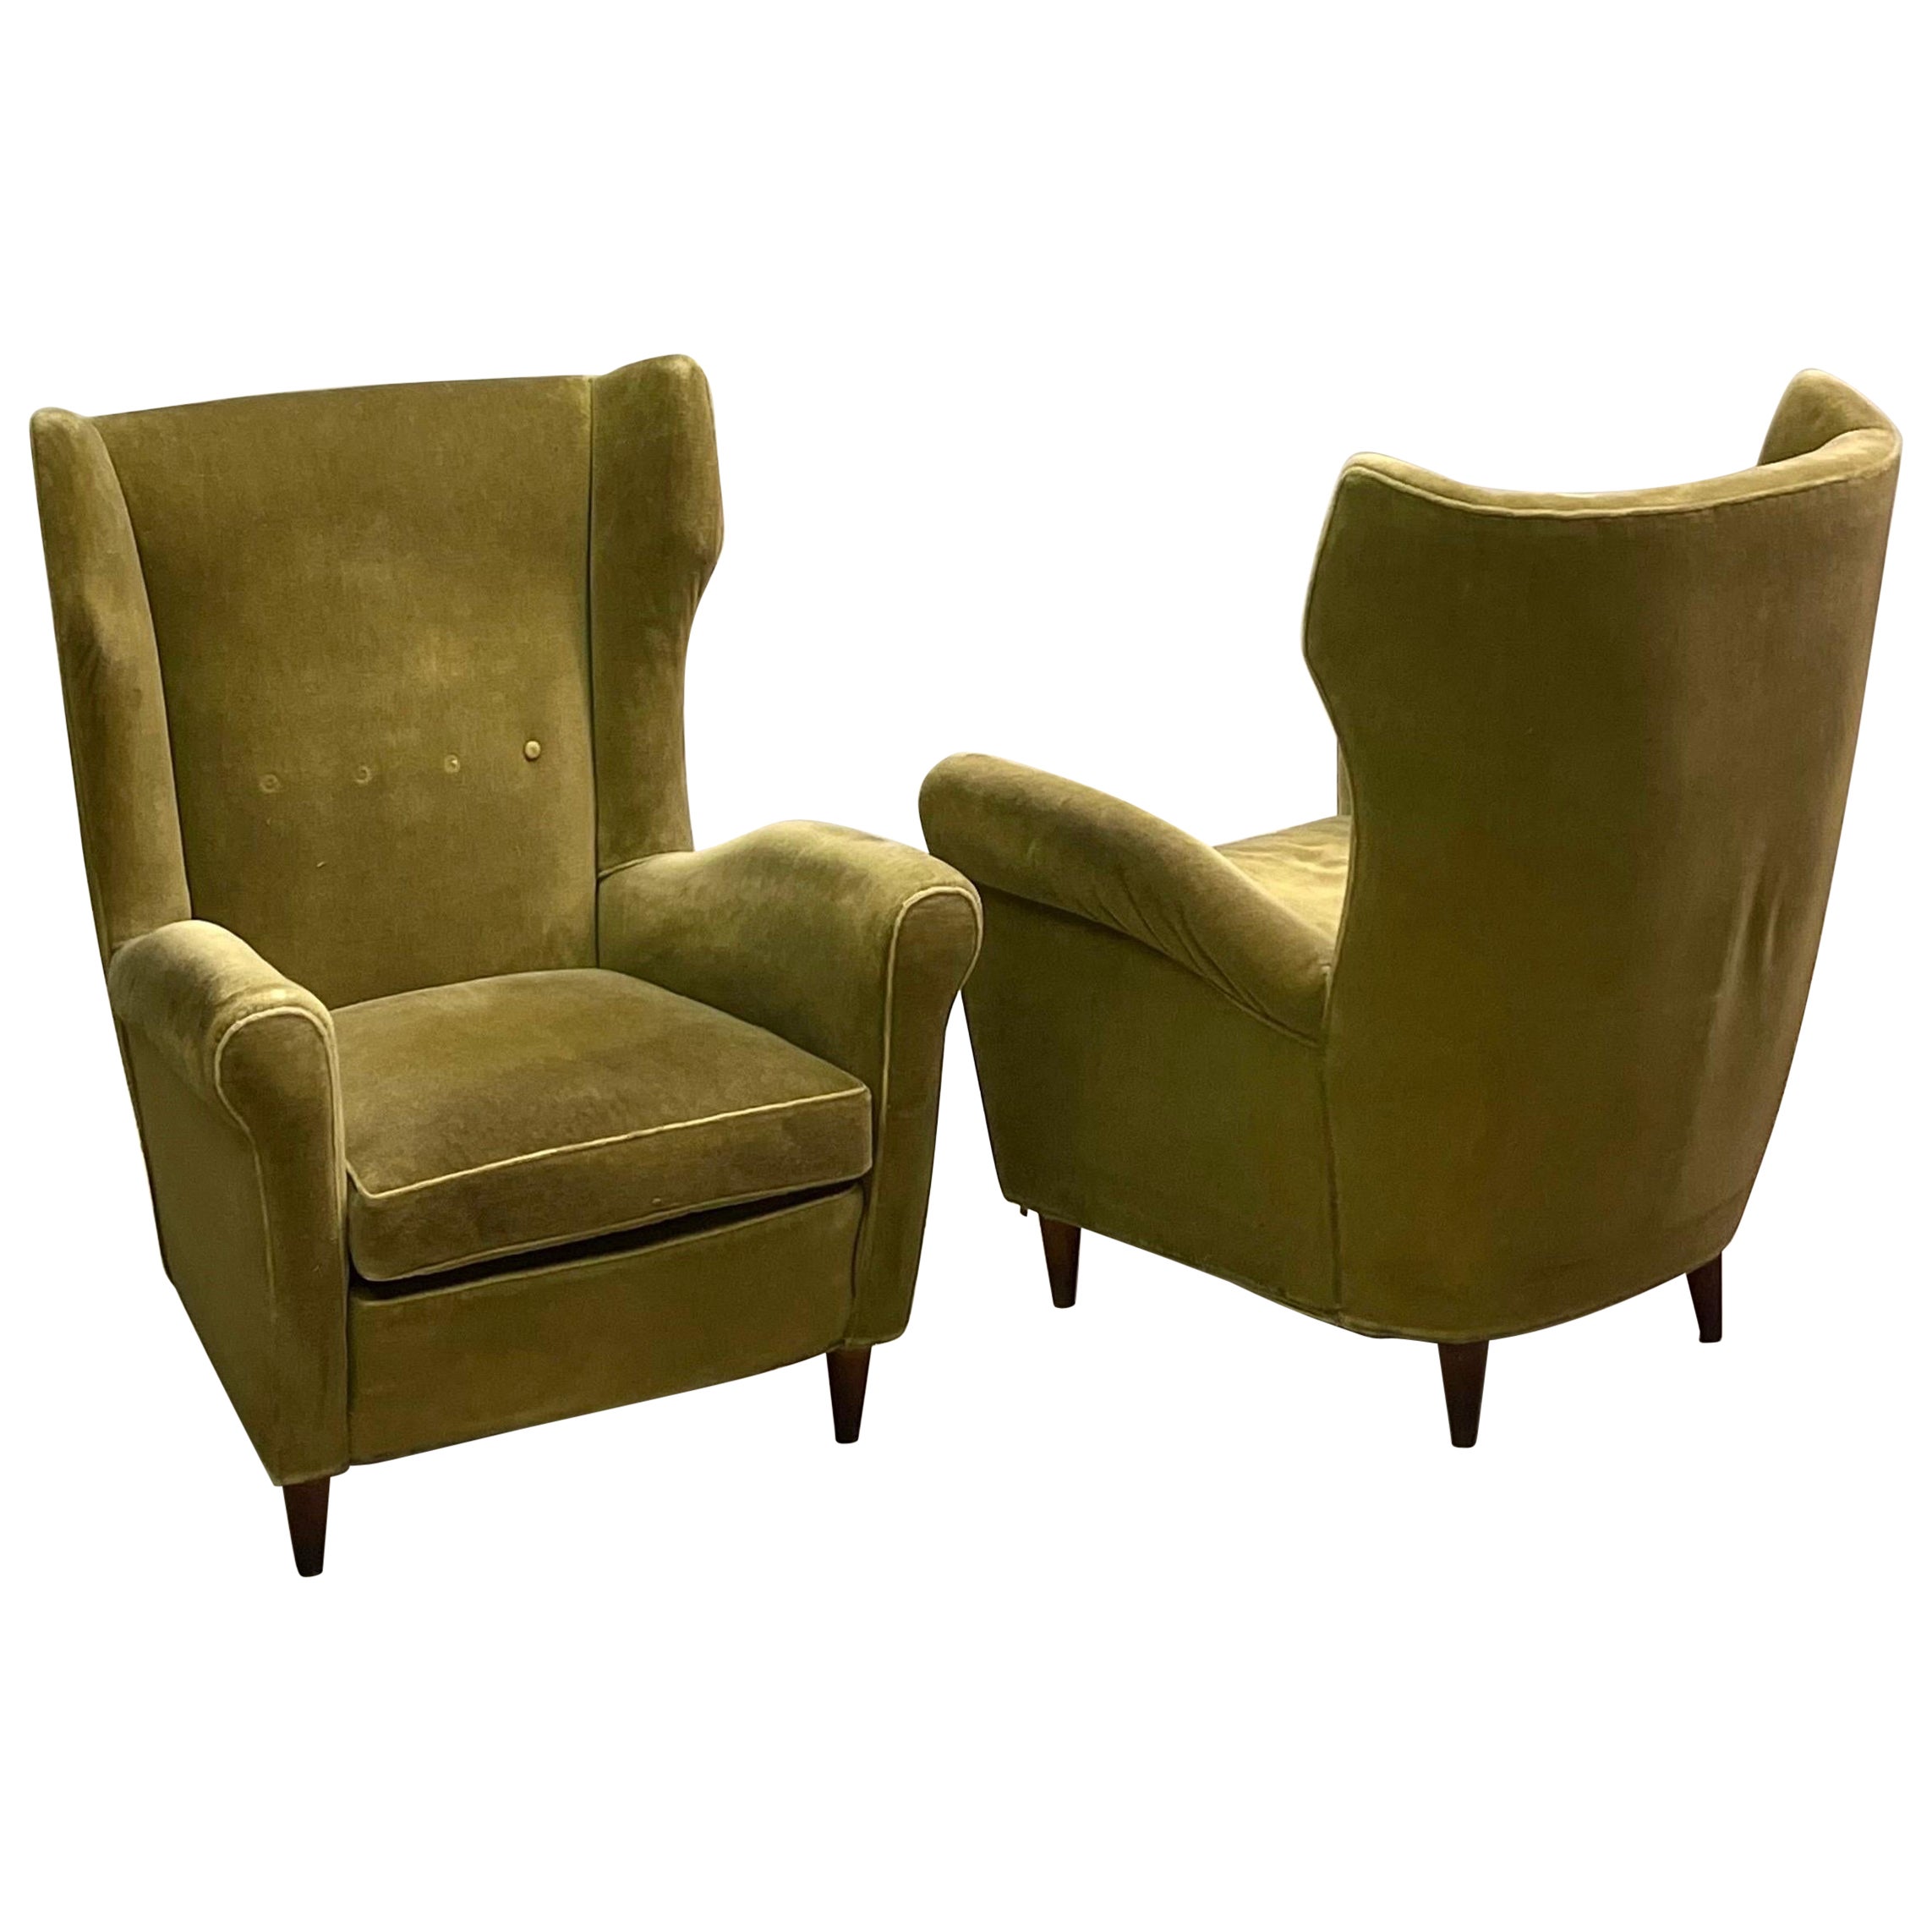 Pair of Italian Mid-Century Wingback Lounge Chairs Attr. to Gio Ponti, Model 512